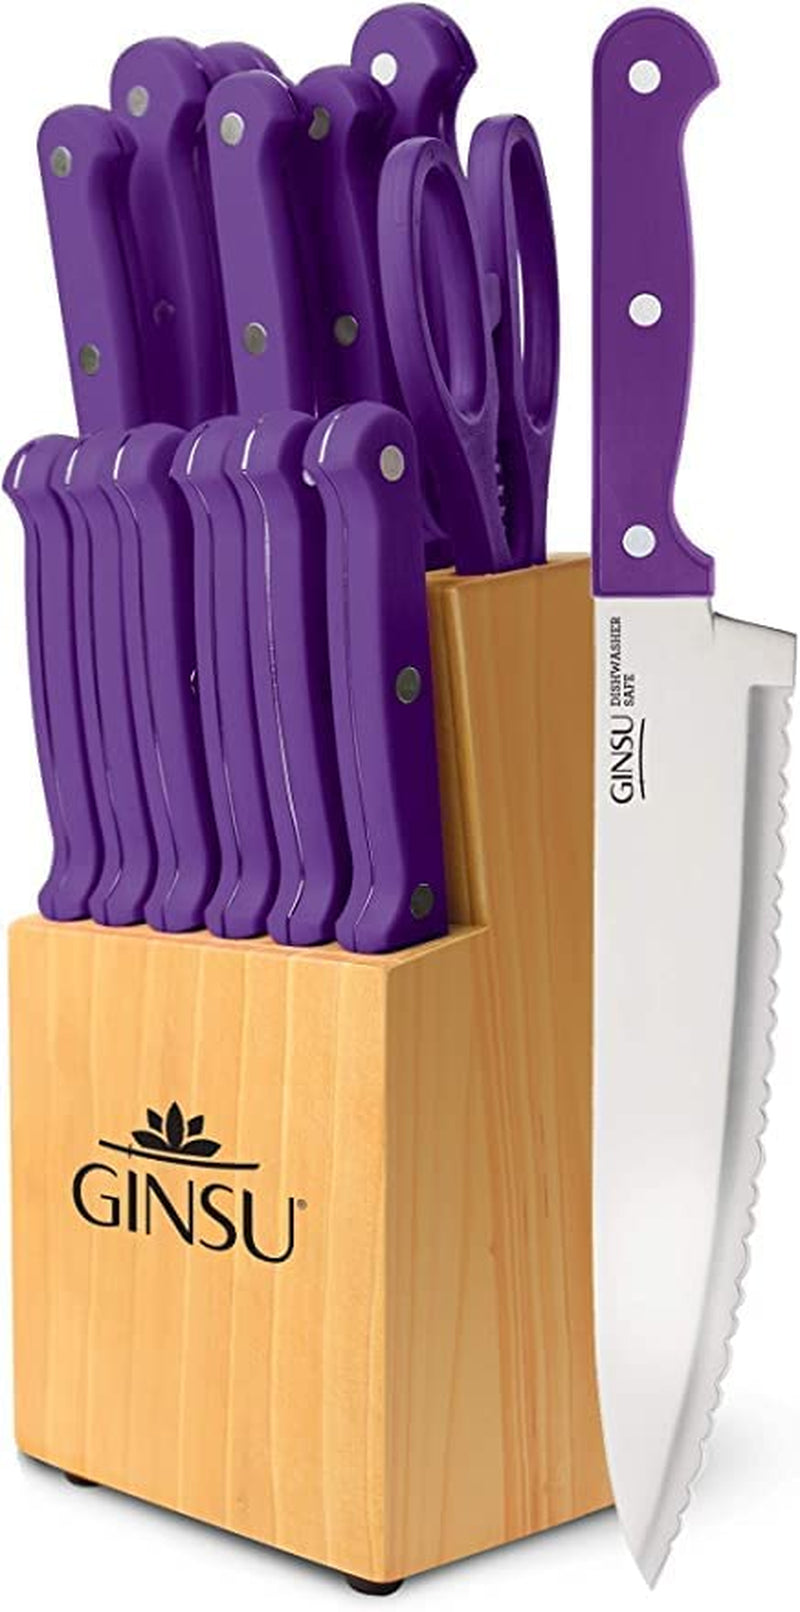 GINSU KIS-PU-DS-014-2 Kiso Dishwasher Safe Purple 14 Piece Knife Set with Natural Block, 9" W X 15" H X 5" D Home & Garden > Kitchen & Dining > Kitchen Tools & Utensils > Kitchen Knives Ginsu Purple Dishwasher Safe Set 